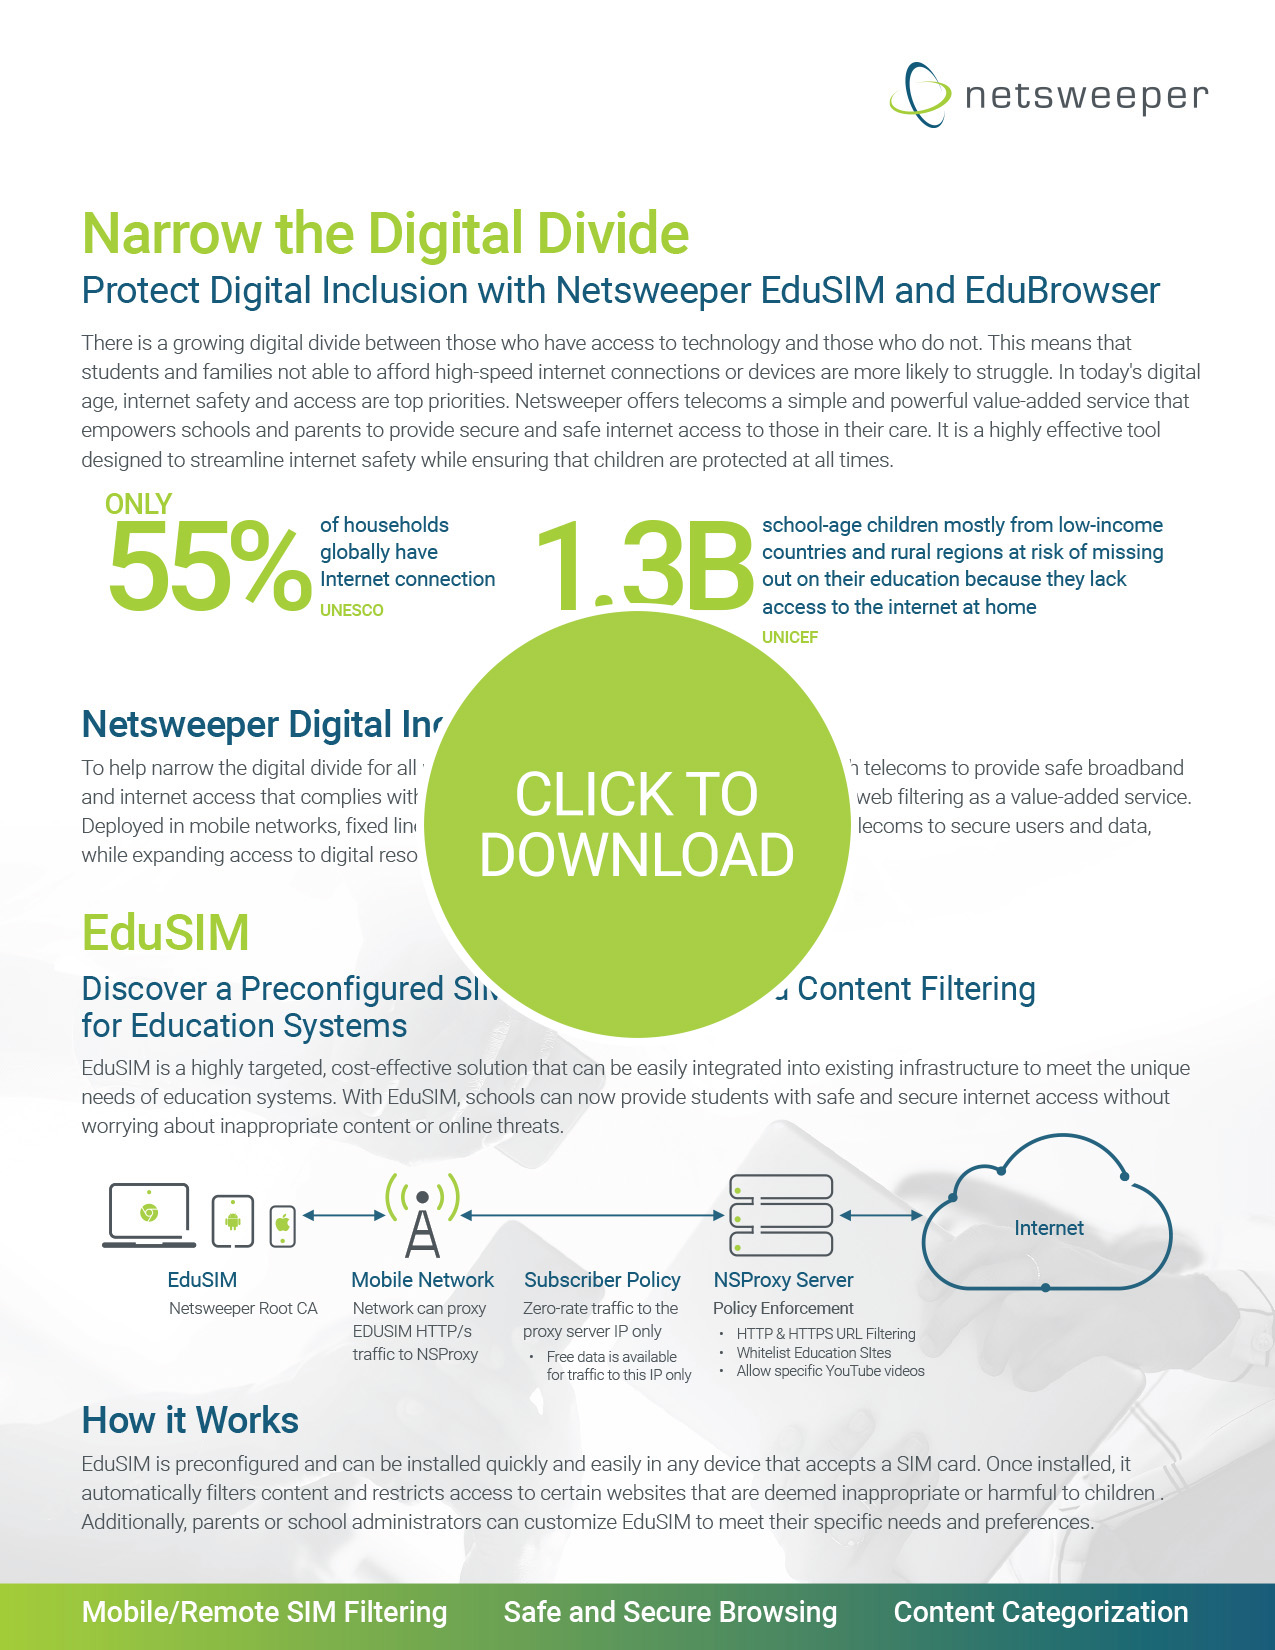 Brochure: Narrow the Digital Divide